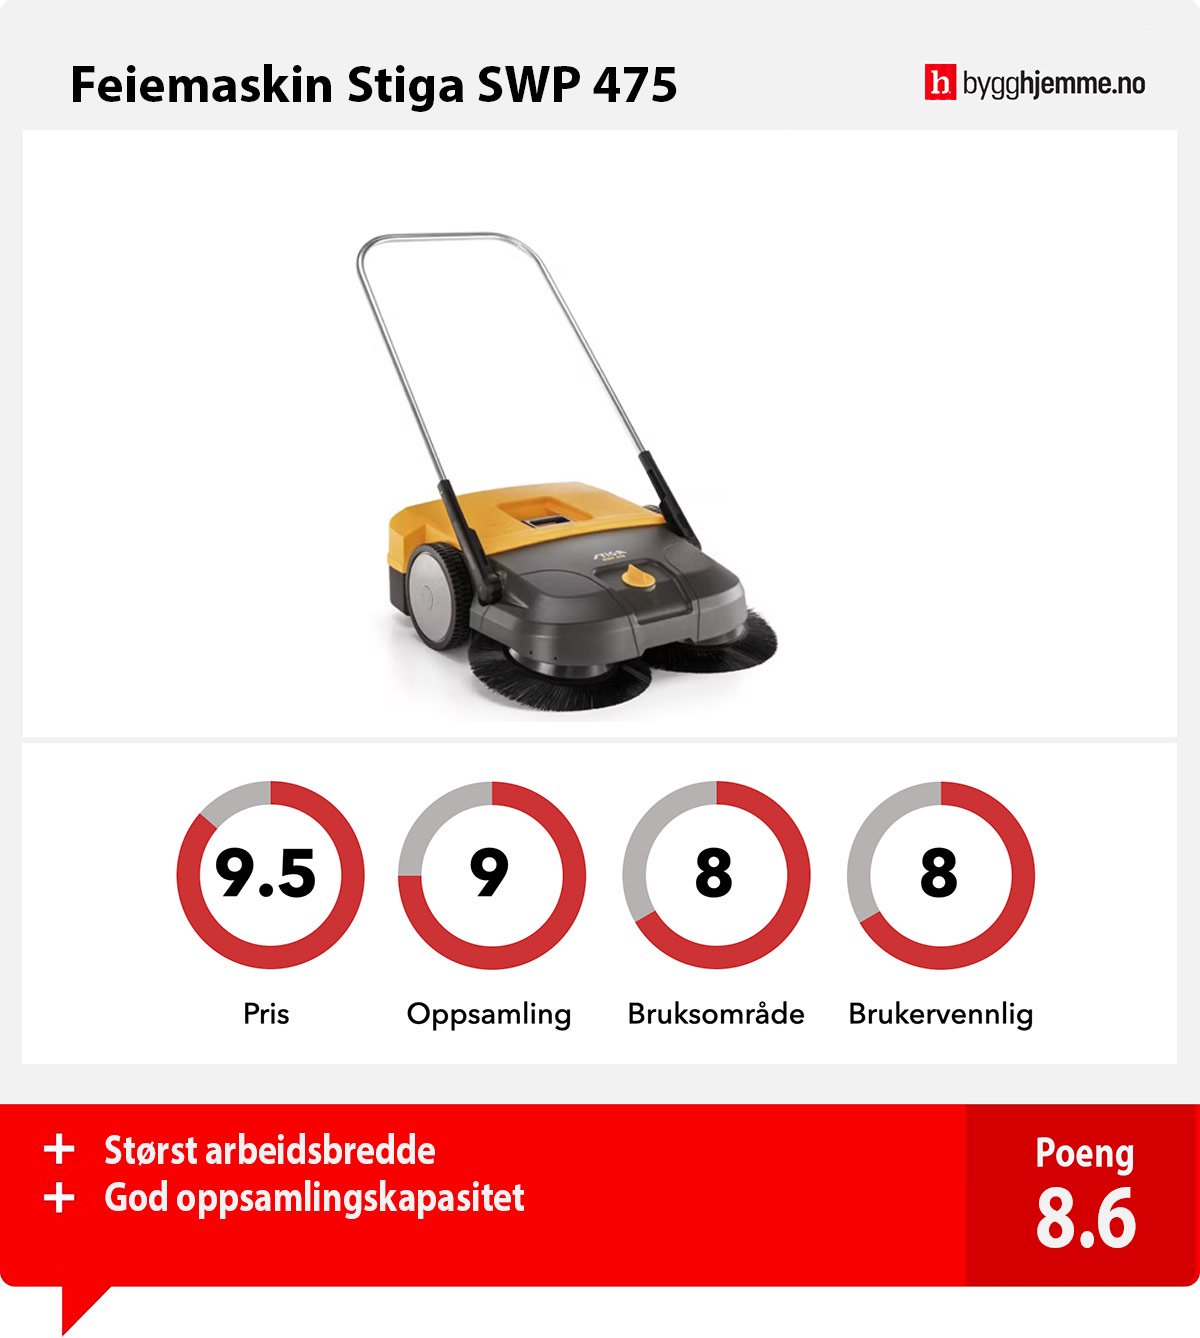 Feiemaskin Stiga SWP 475